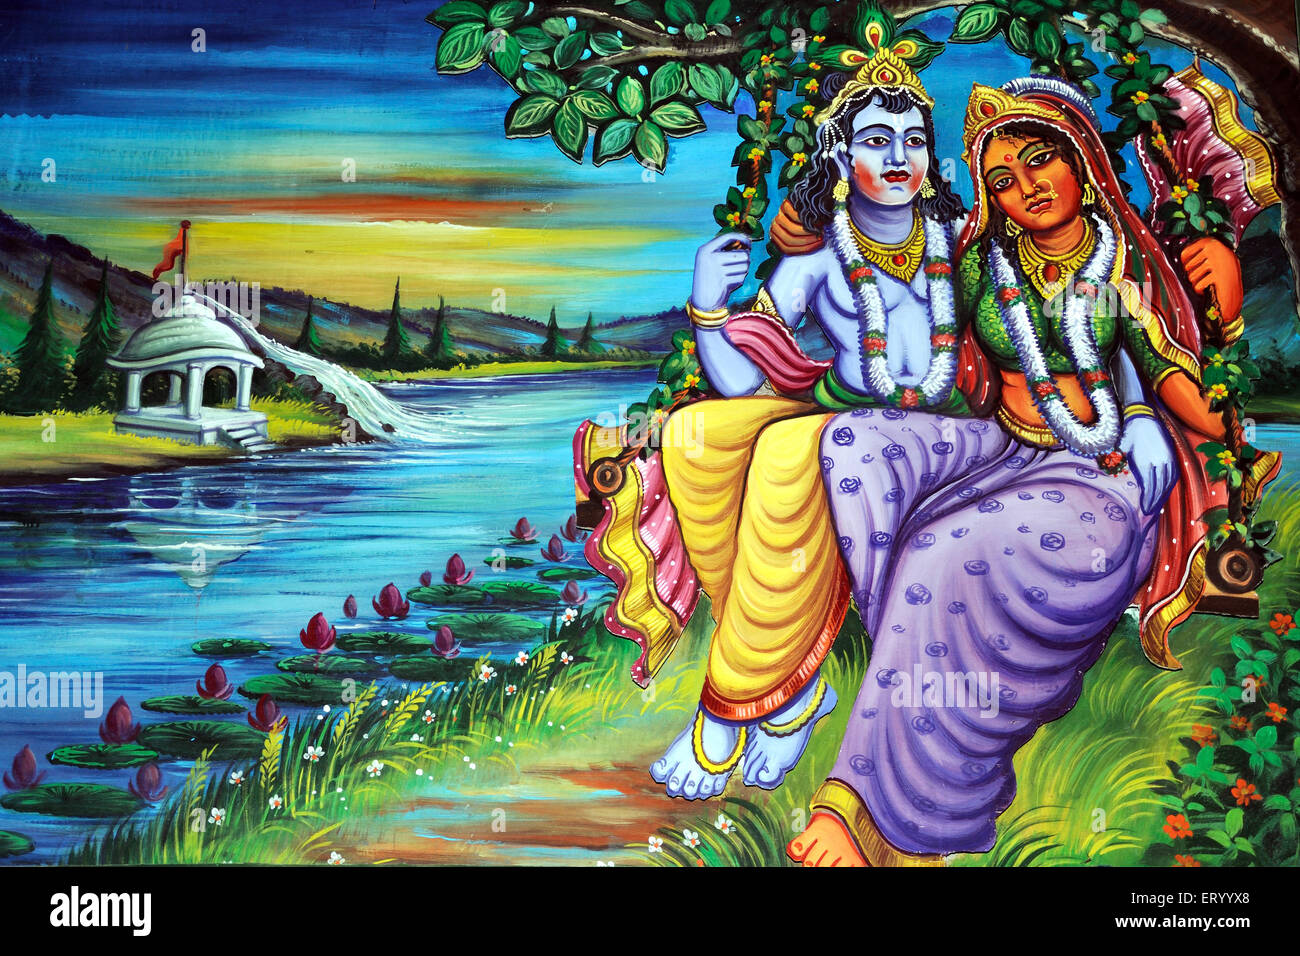 Shri krishna hi-res stock photography and images - Alamy